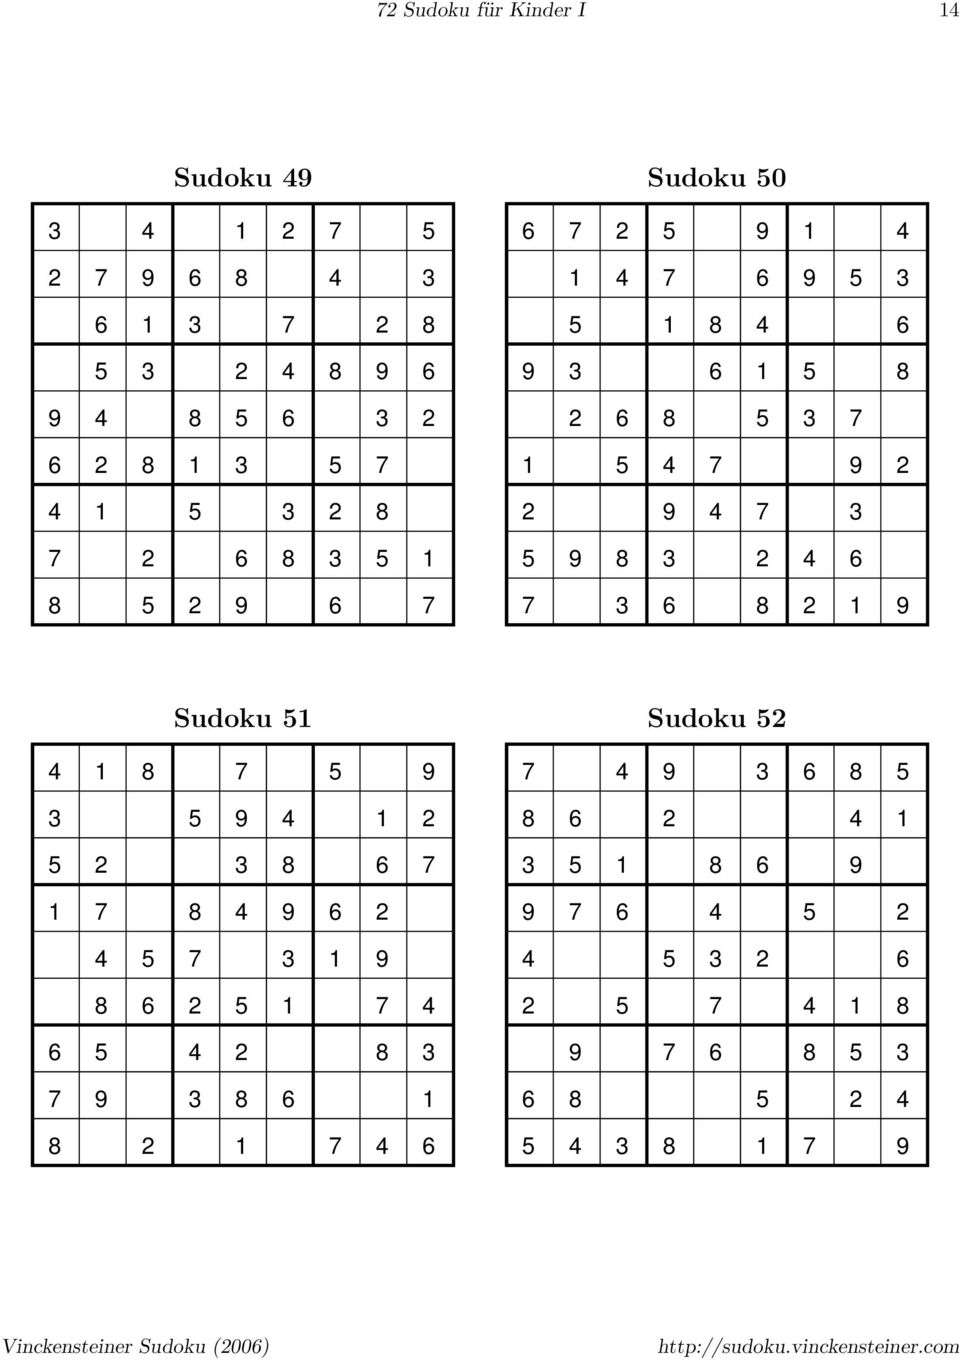 9 8 3 6 7 3 6 8 9 Sudoku 5 8 7 5 9 3 5 9 5 3 8 6 7 7 8 9 6 5 7 3 9 8 6 5 7 6 5 8 3 7 9 3